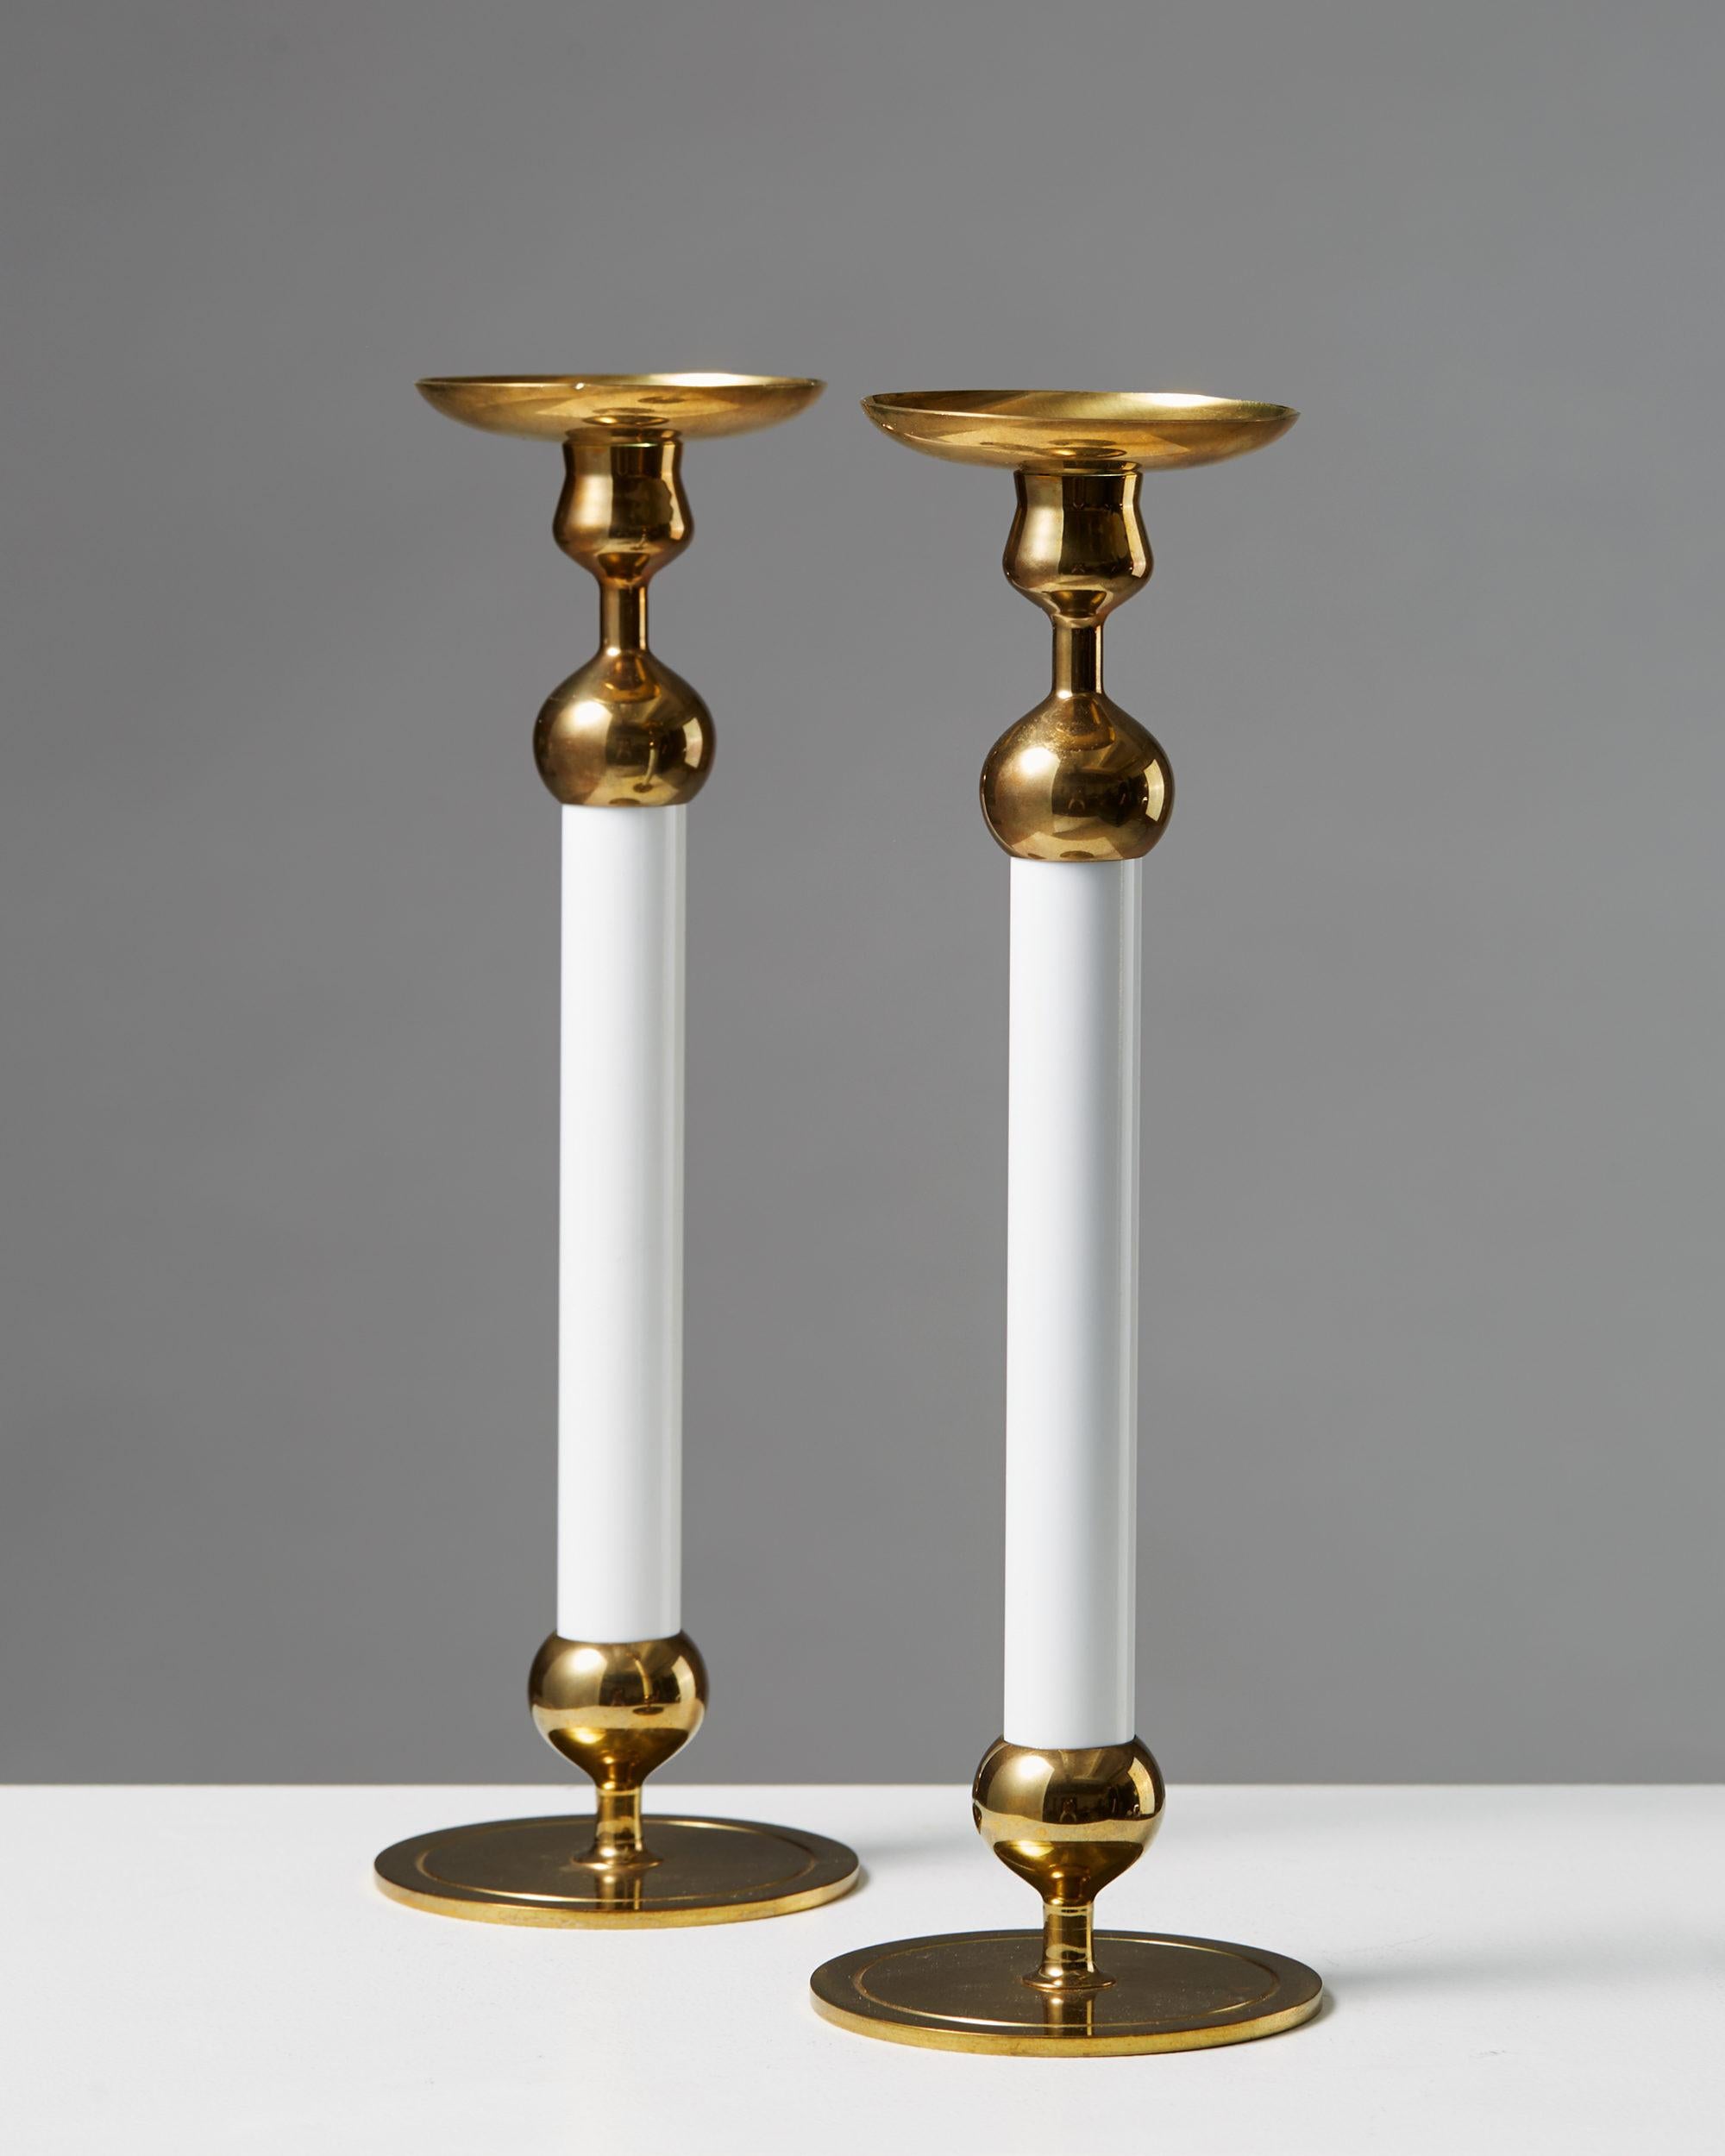 Scandinavian Modern Pair of Candlesticks Designed by Josef Frank for Svenskt Tenn, Sweden, 1950s